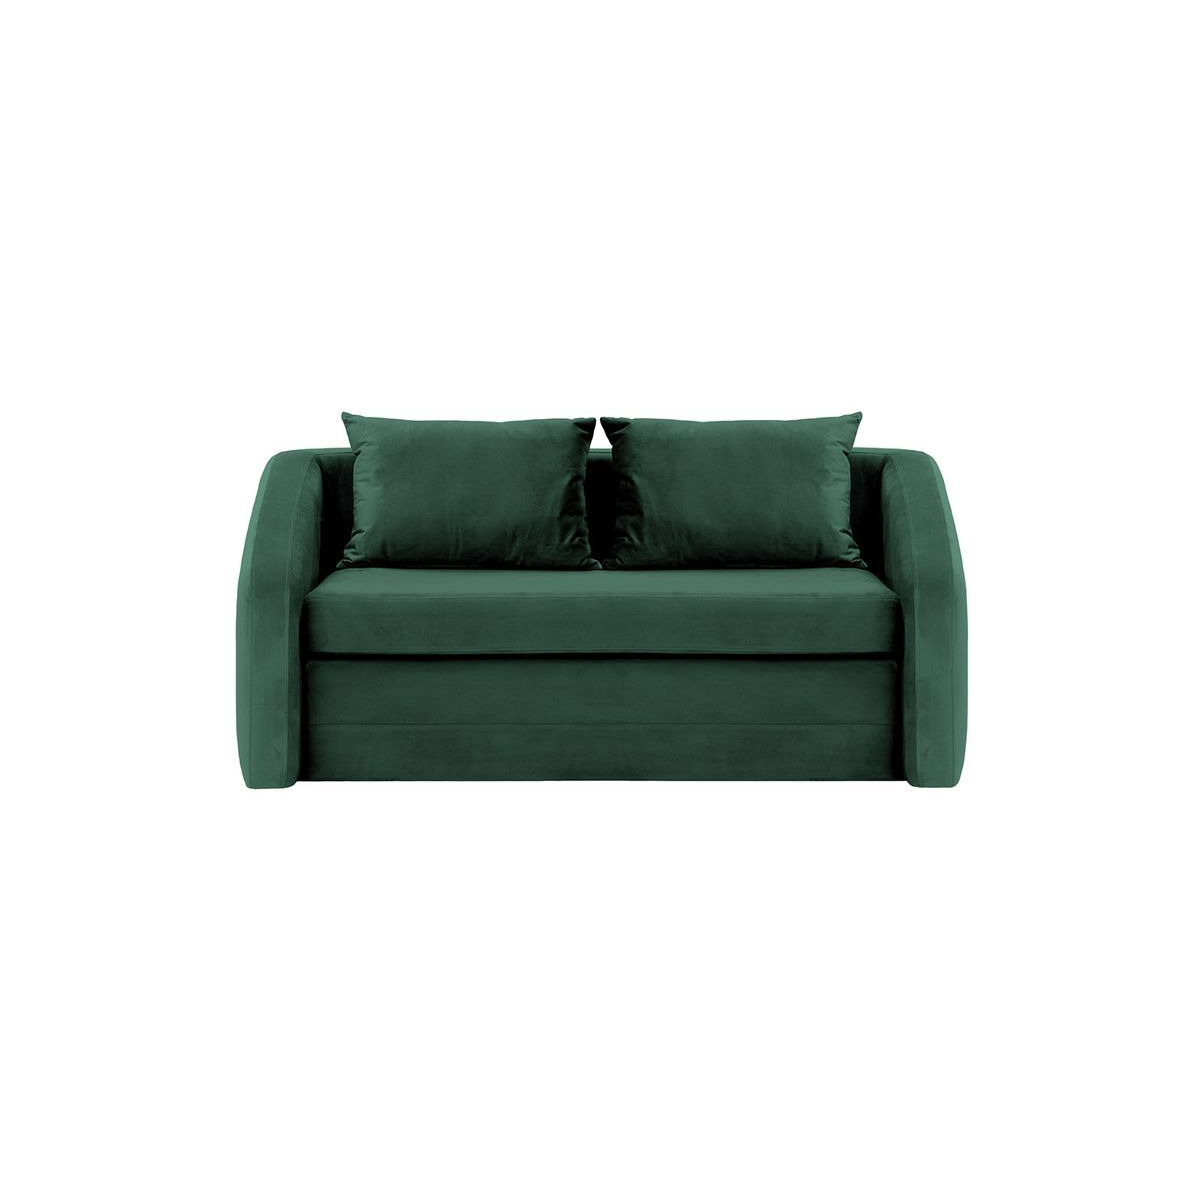 Alma 2.5 Seater Sofa Bed, boucle ivory - image 1